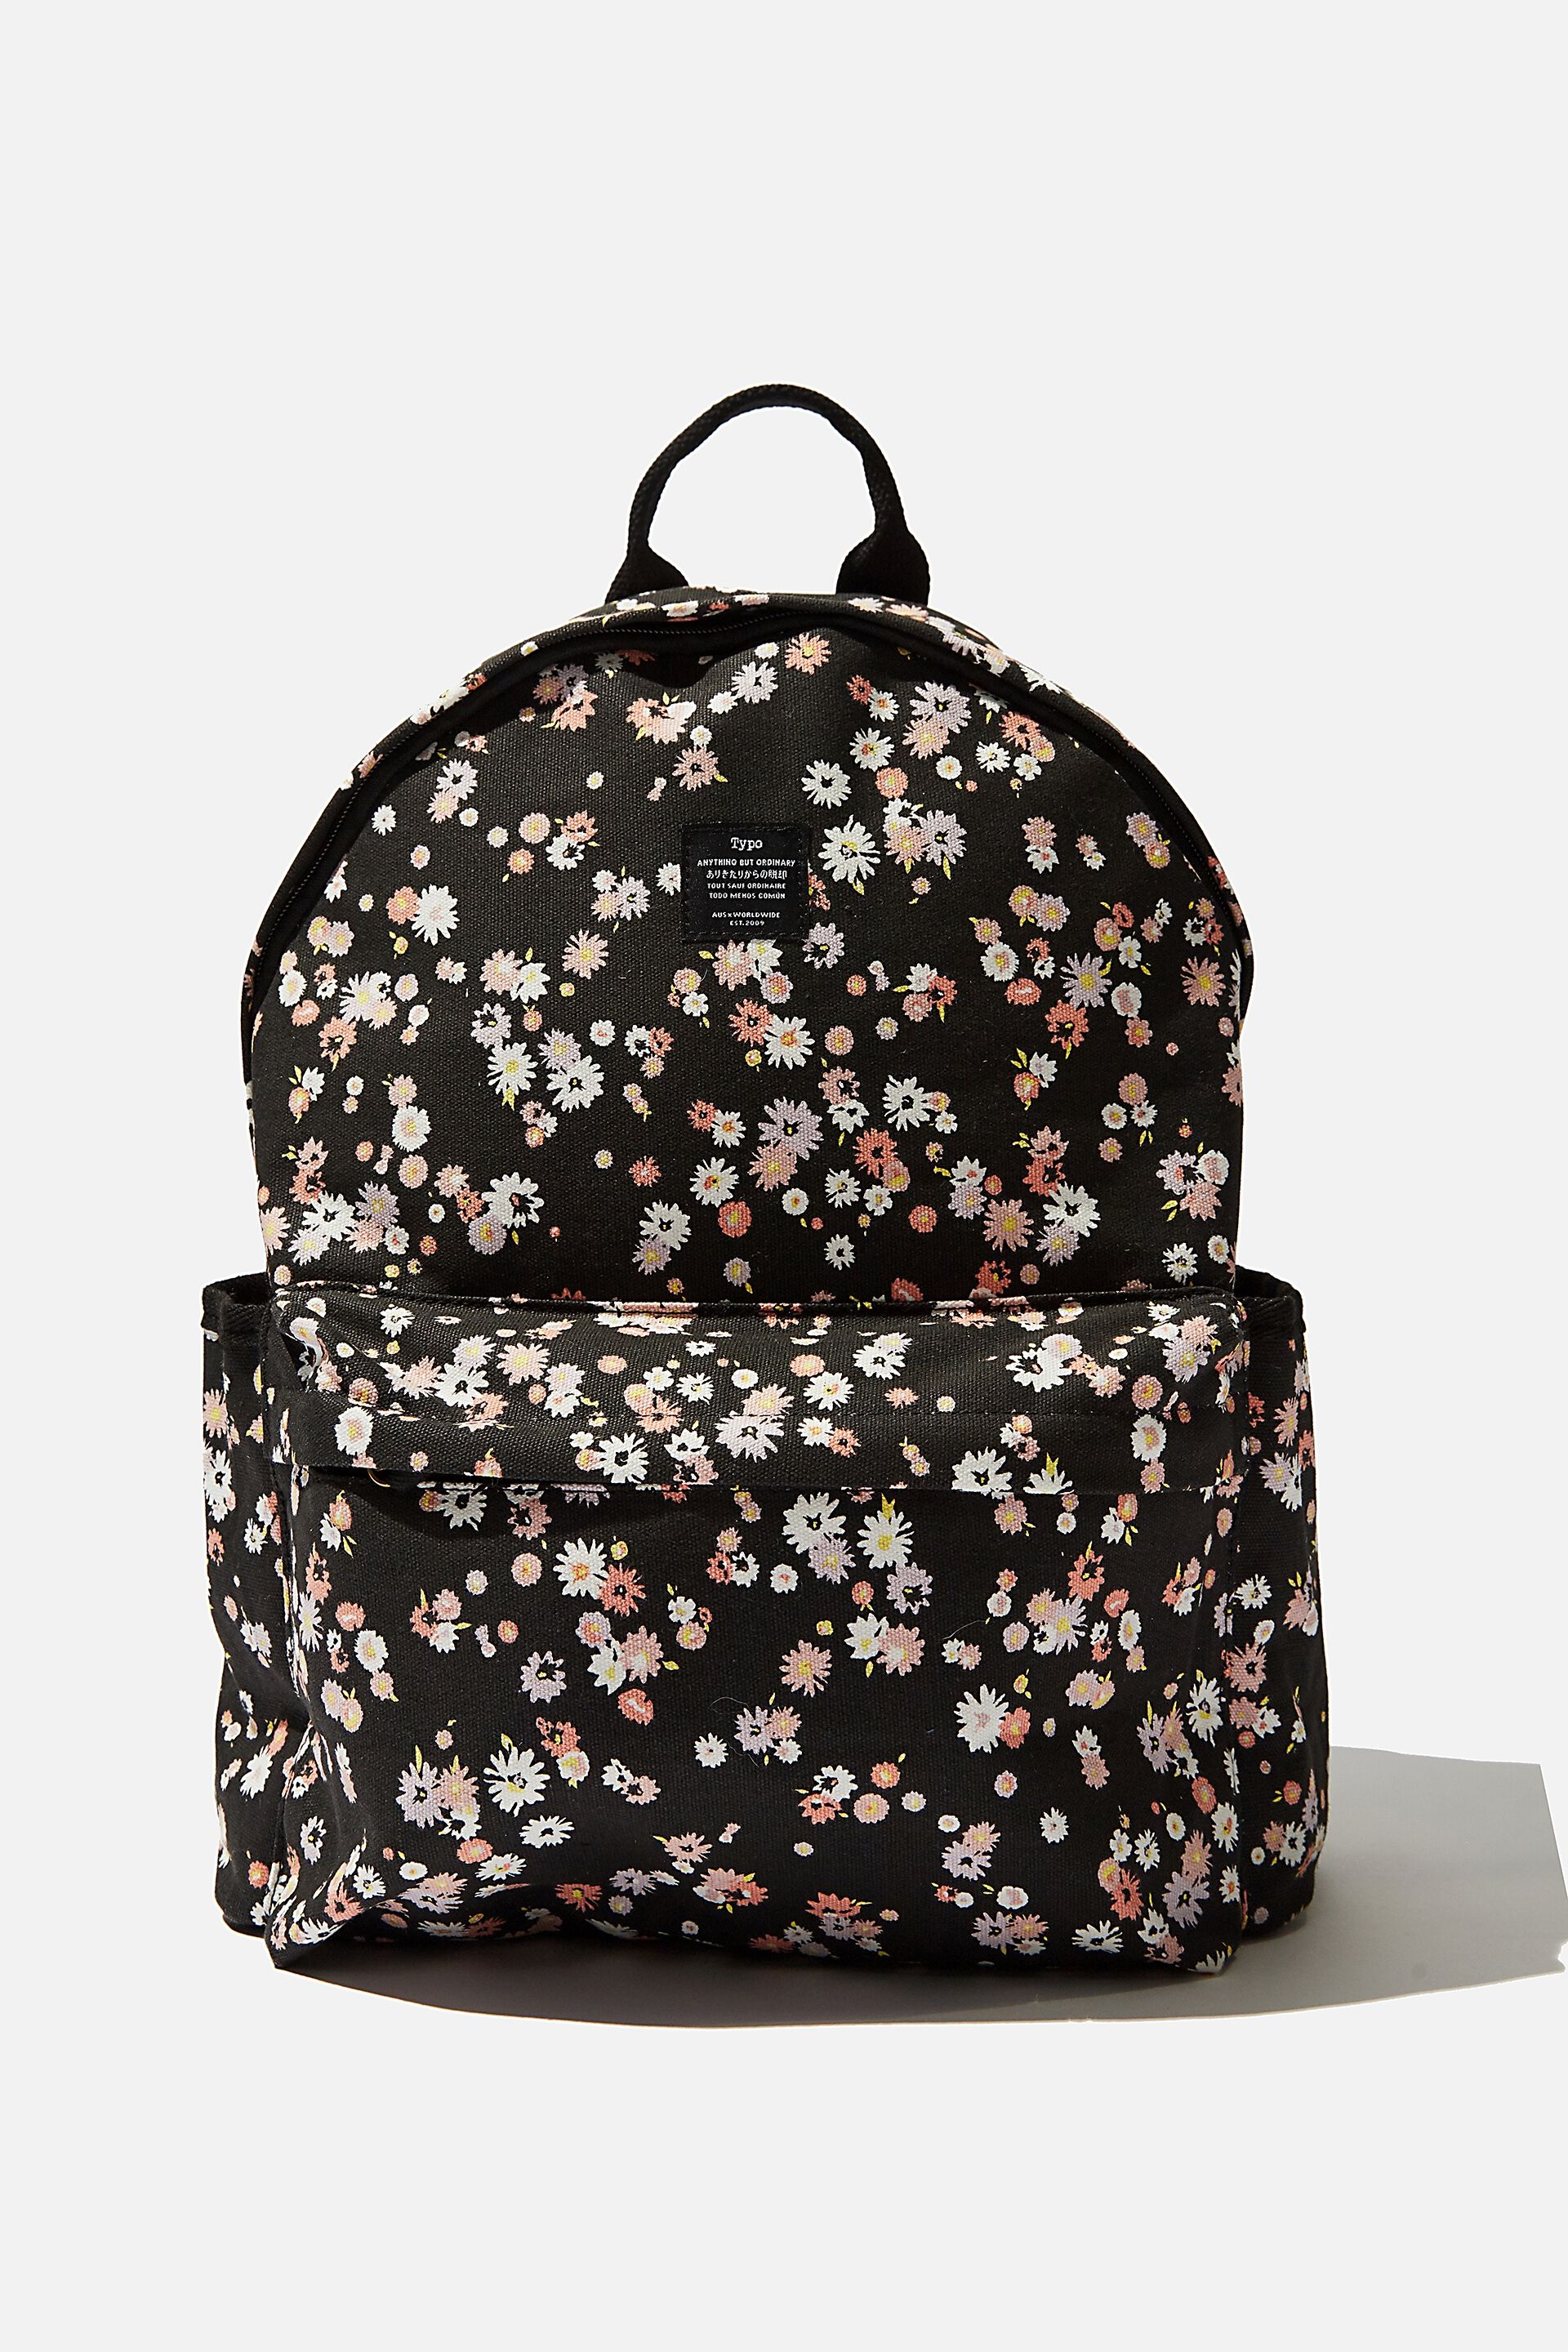 mini backpack under $10